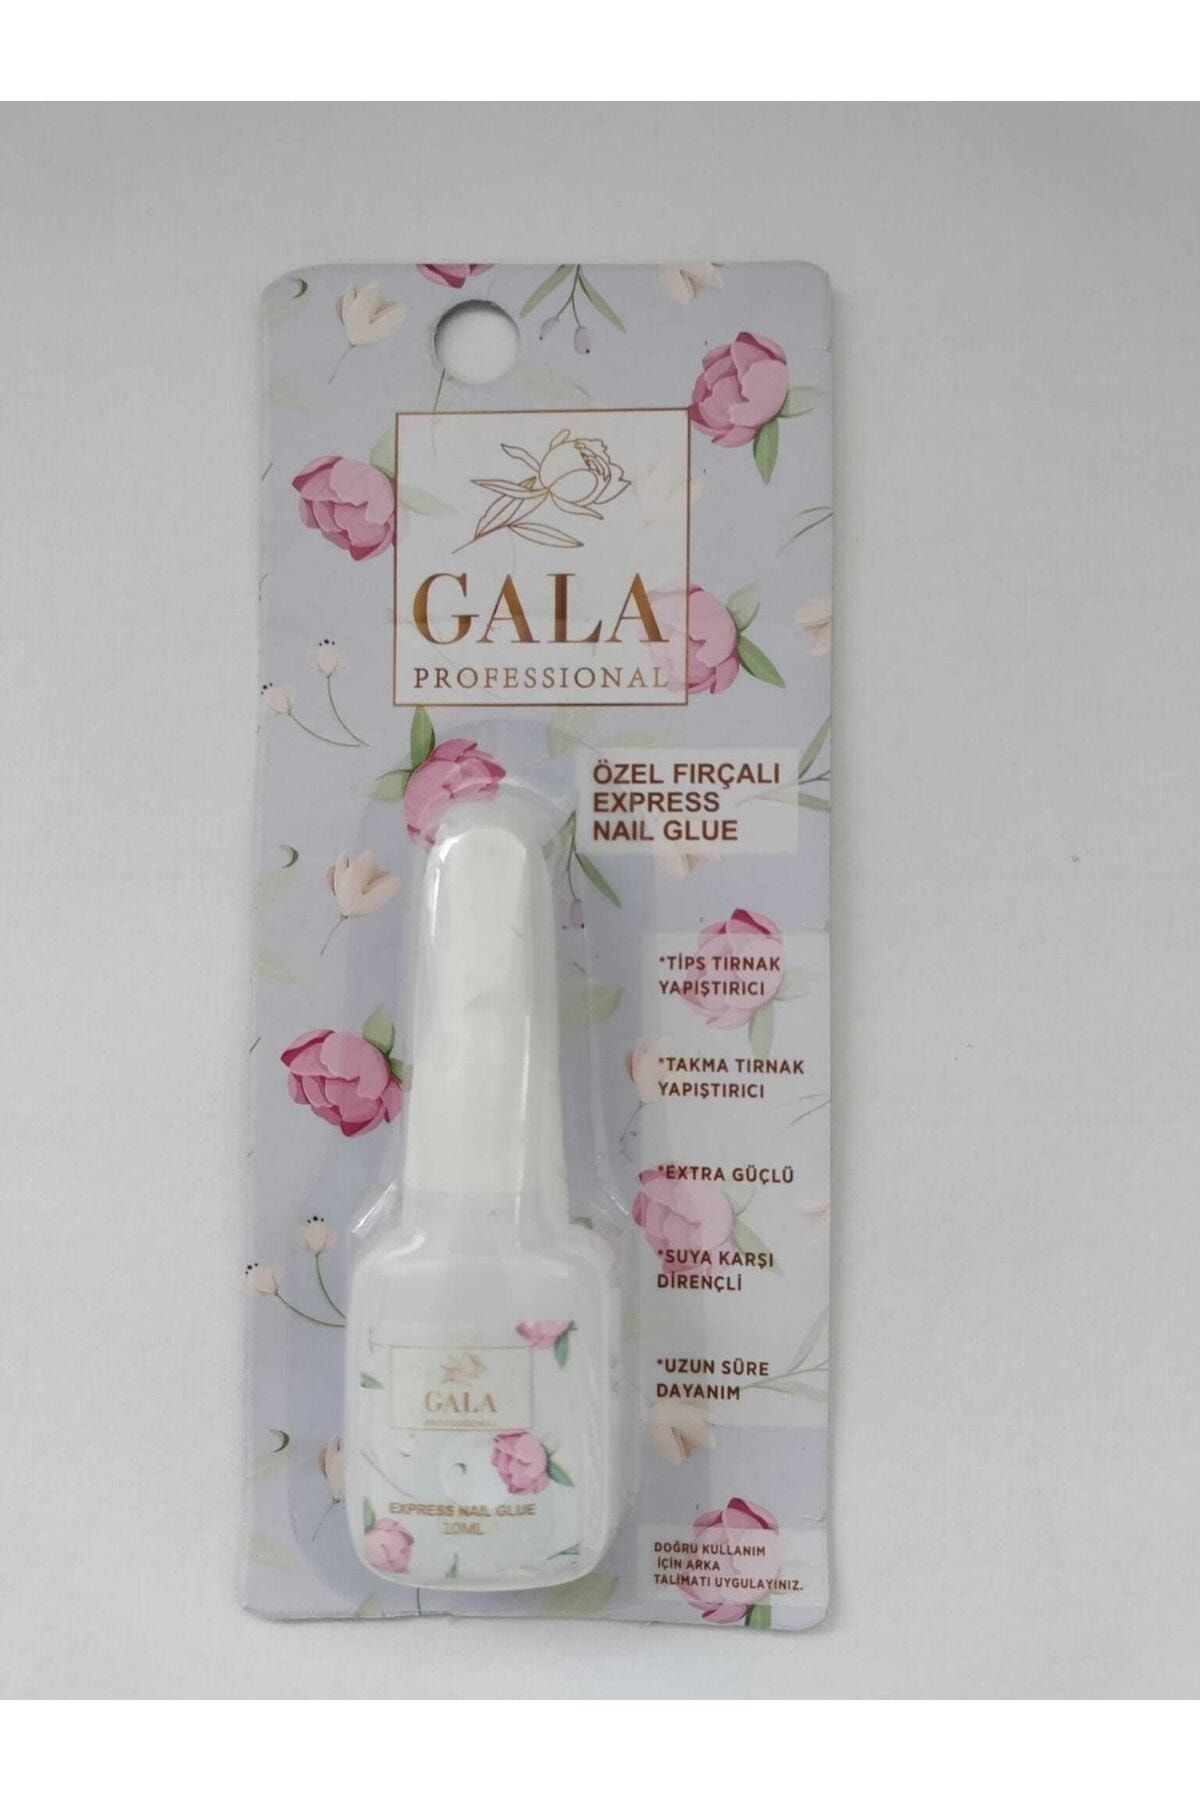 Gala Protez Tırnak Tips Yapıştırıcı Özel Fırçalı Express Nail Glue 10ml